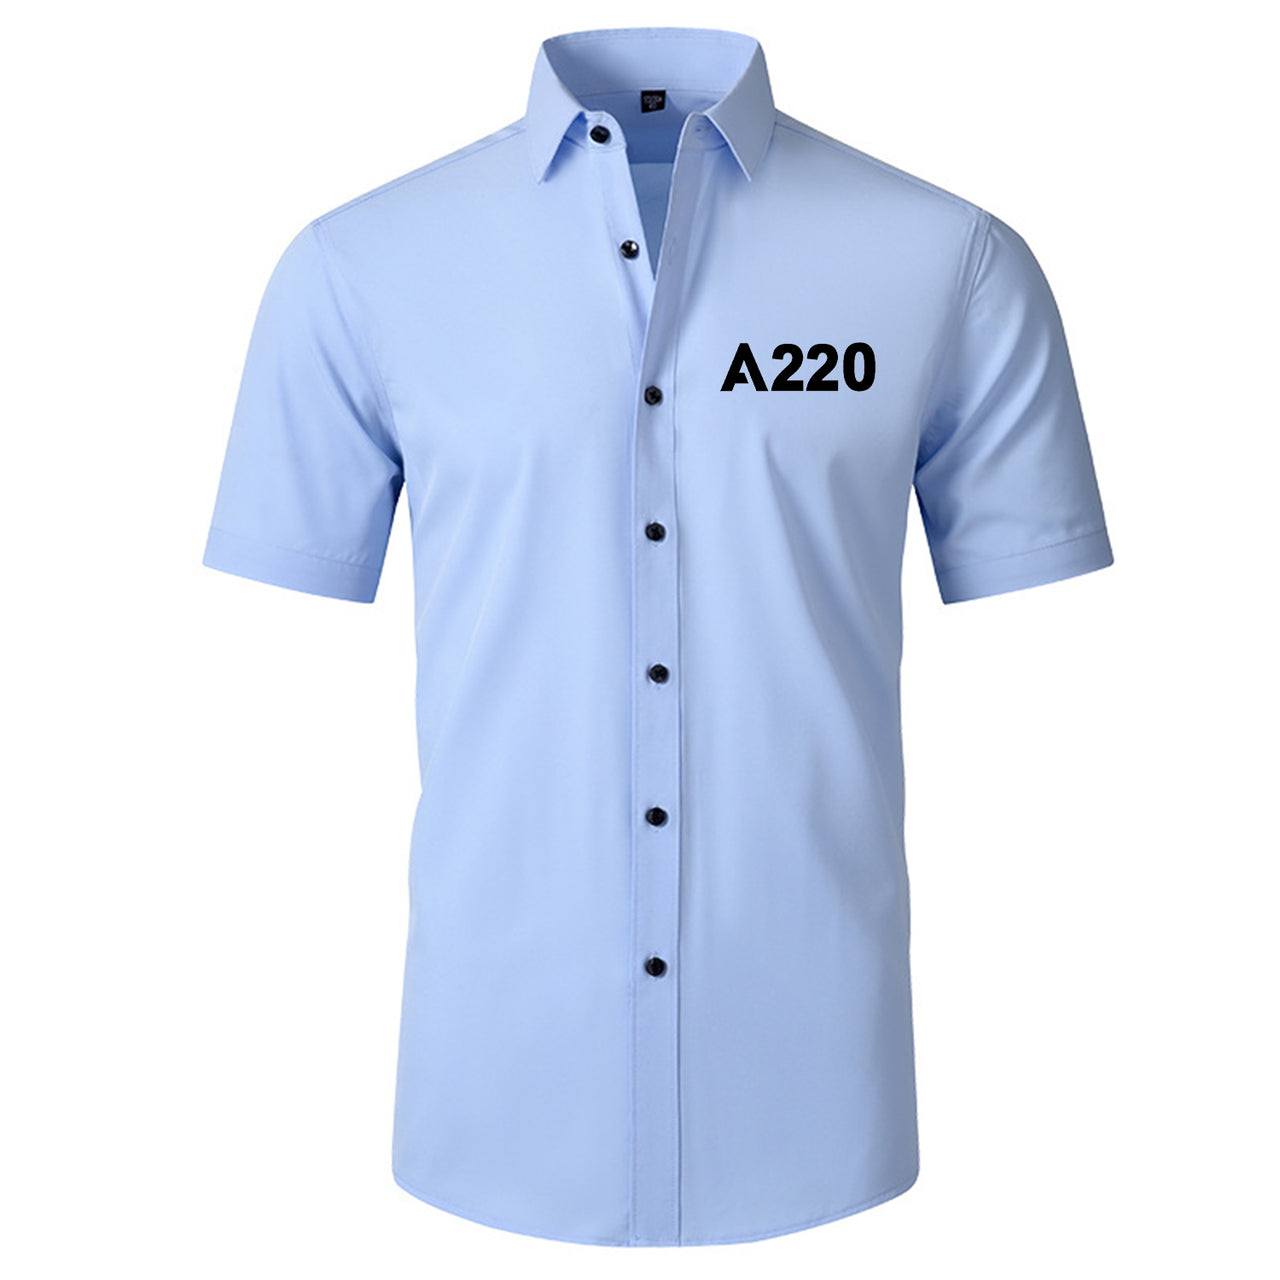 A220 Flat Text Designed Short Sleeve Shirts